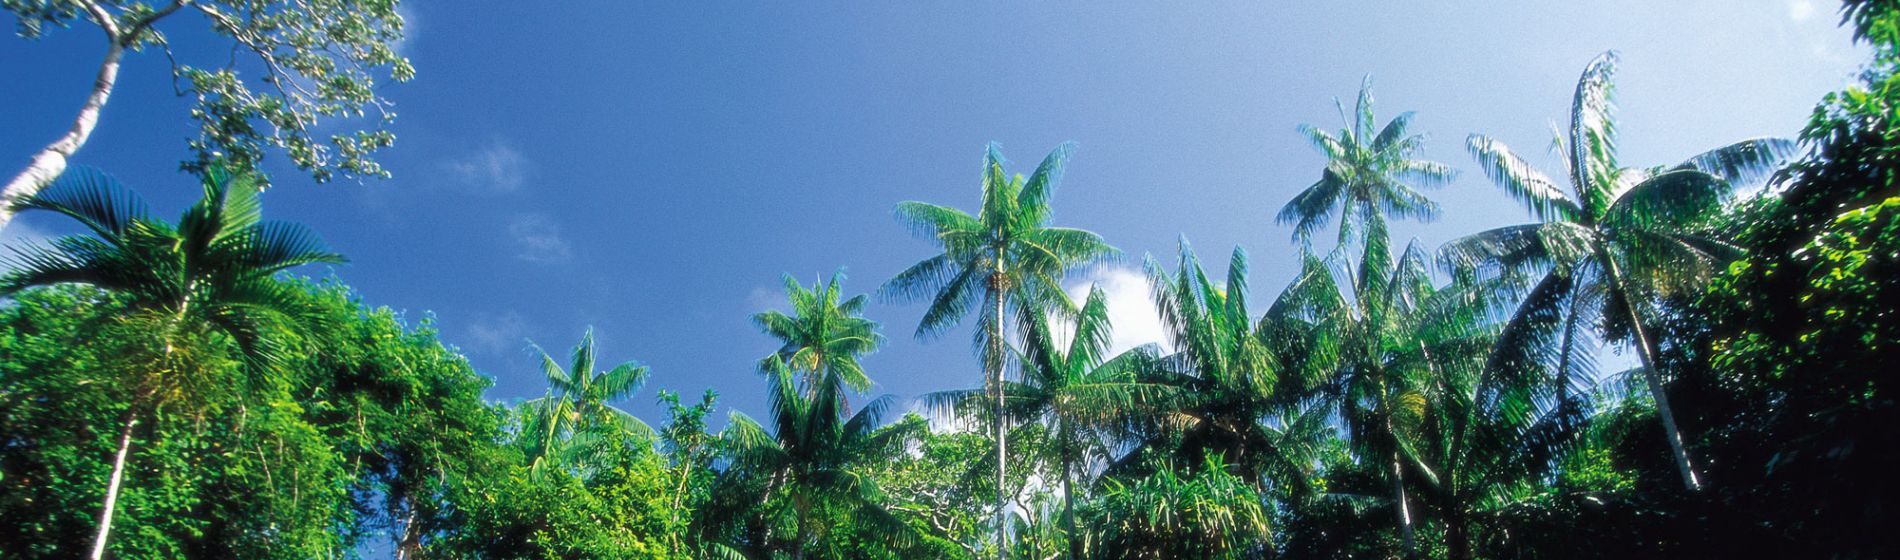 qld_palms_and_rainforest.jpg